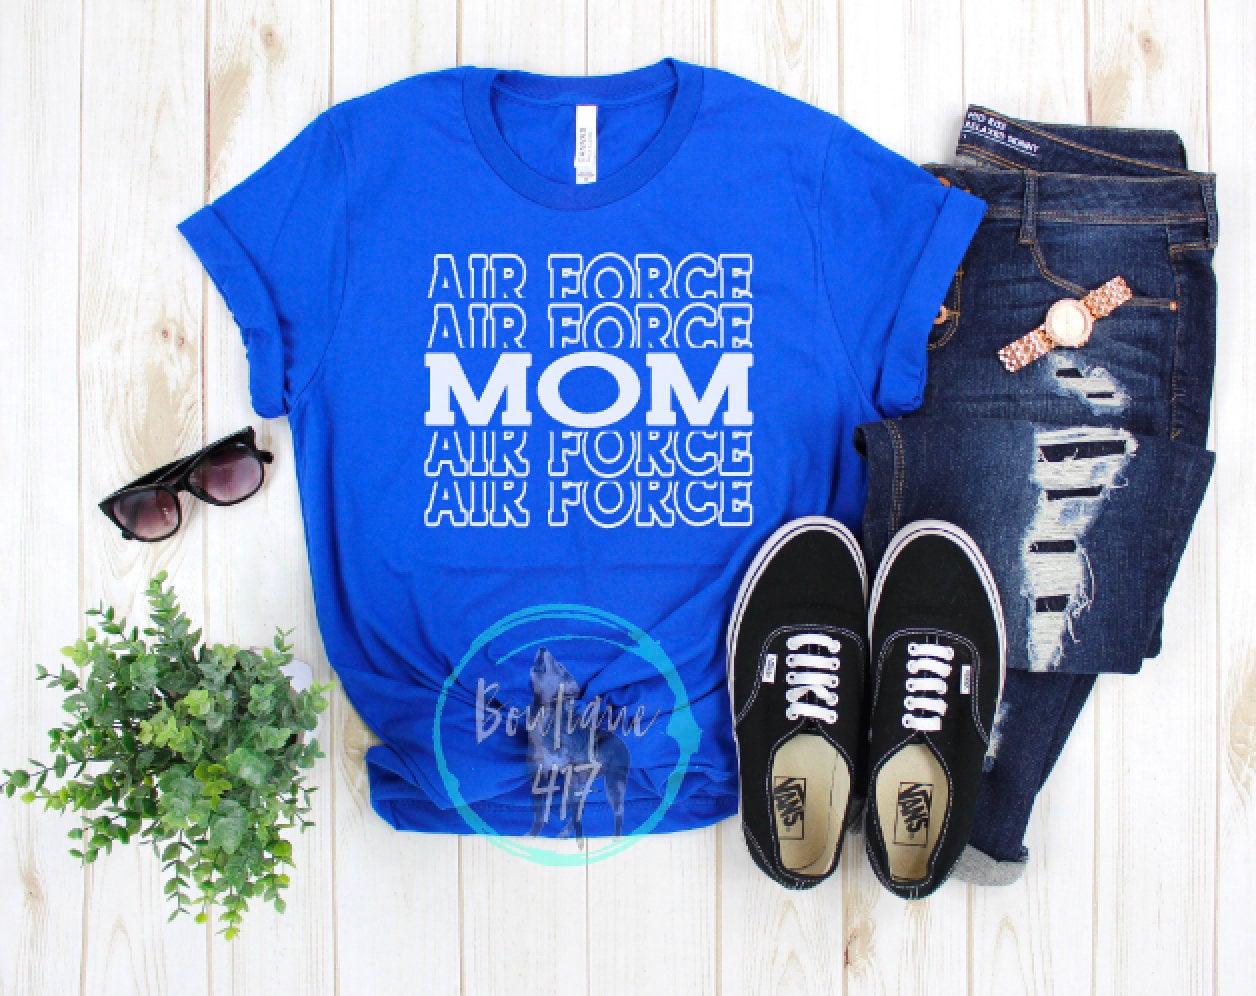 Air Force Mom unisex tee